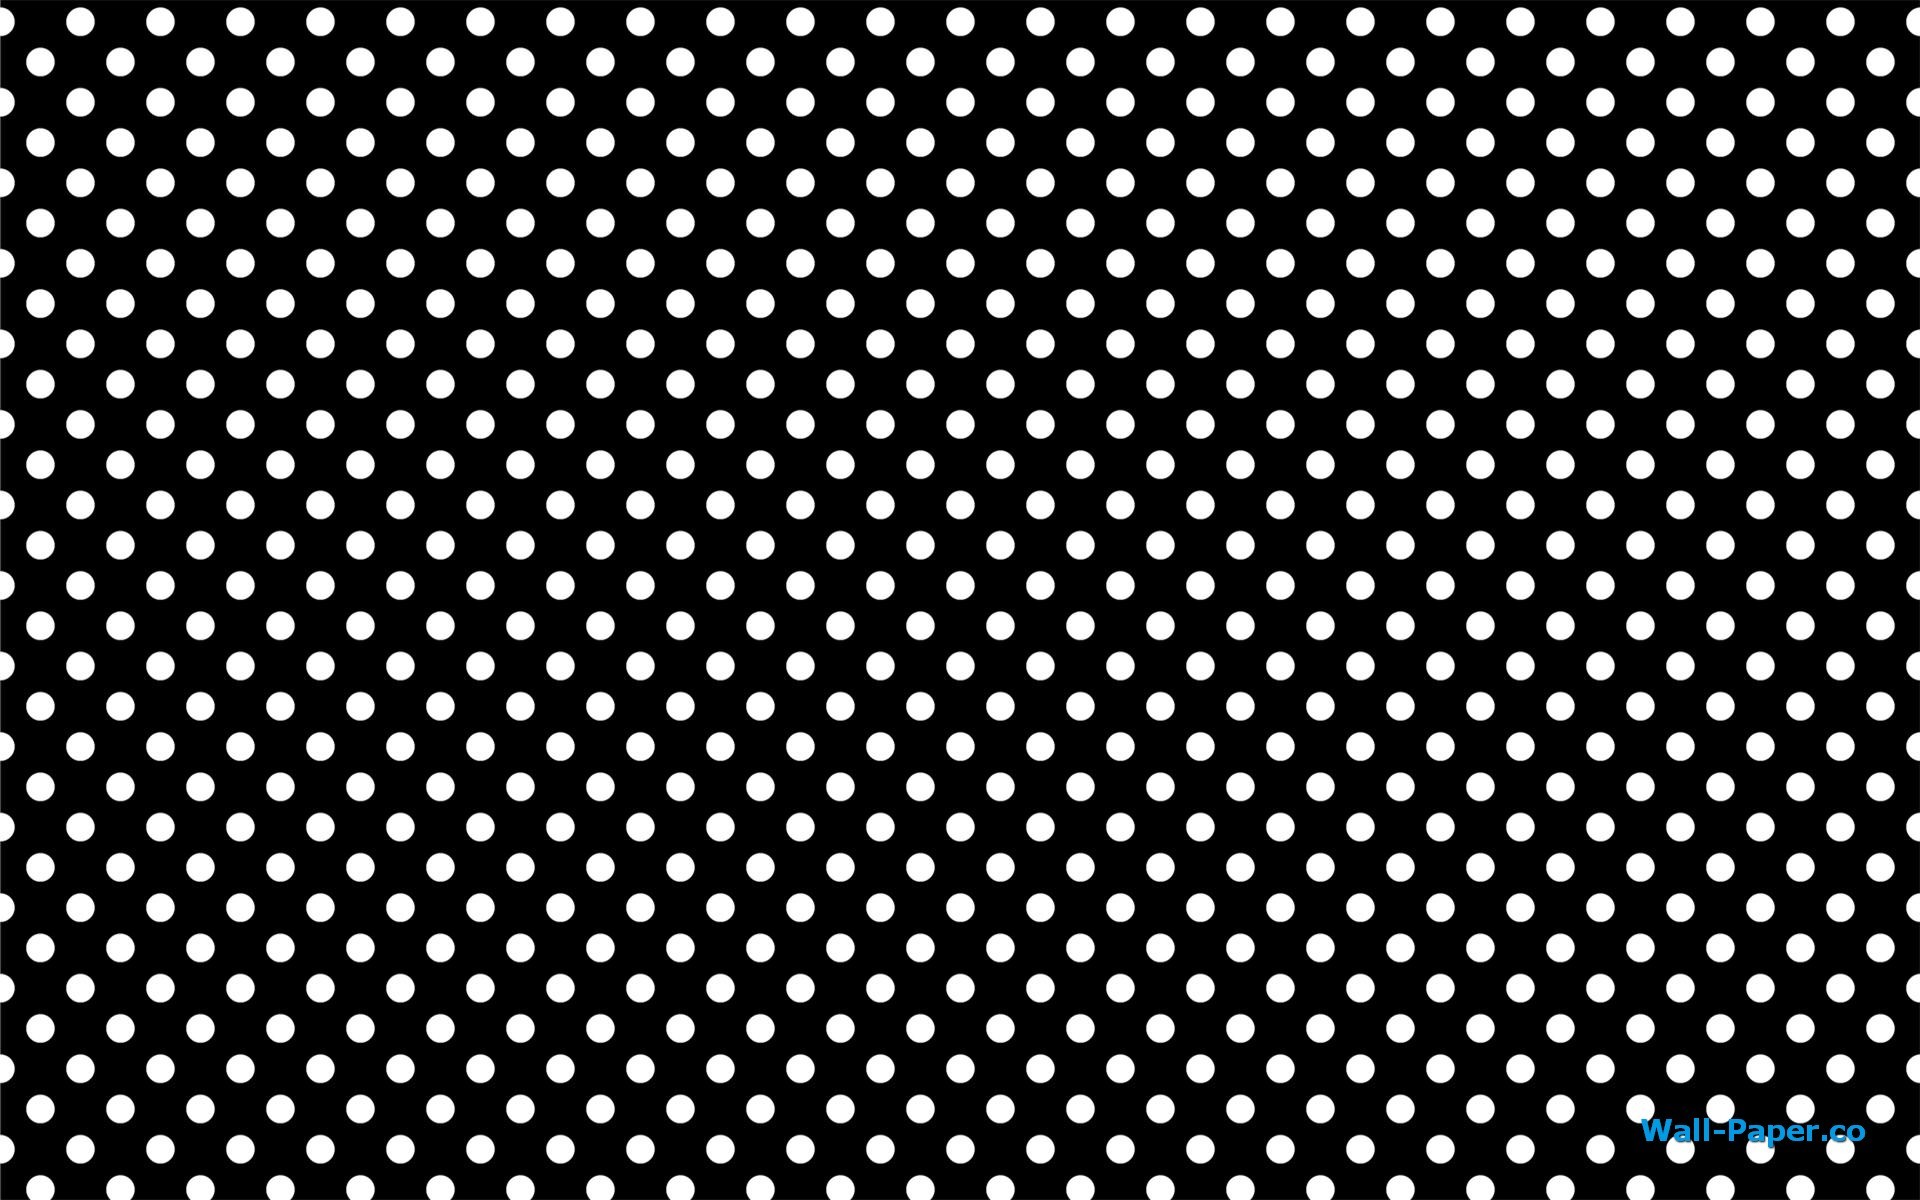 Gold Polka Dot Desktop Wallpaper White dots on black background